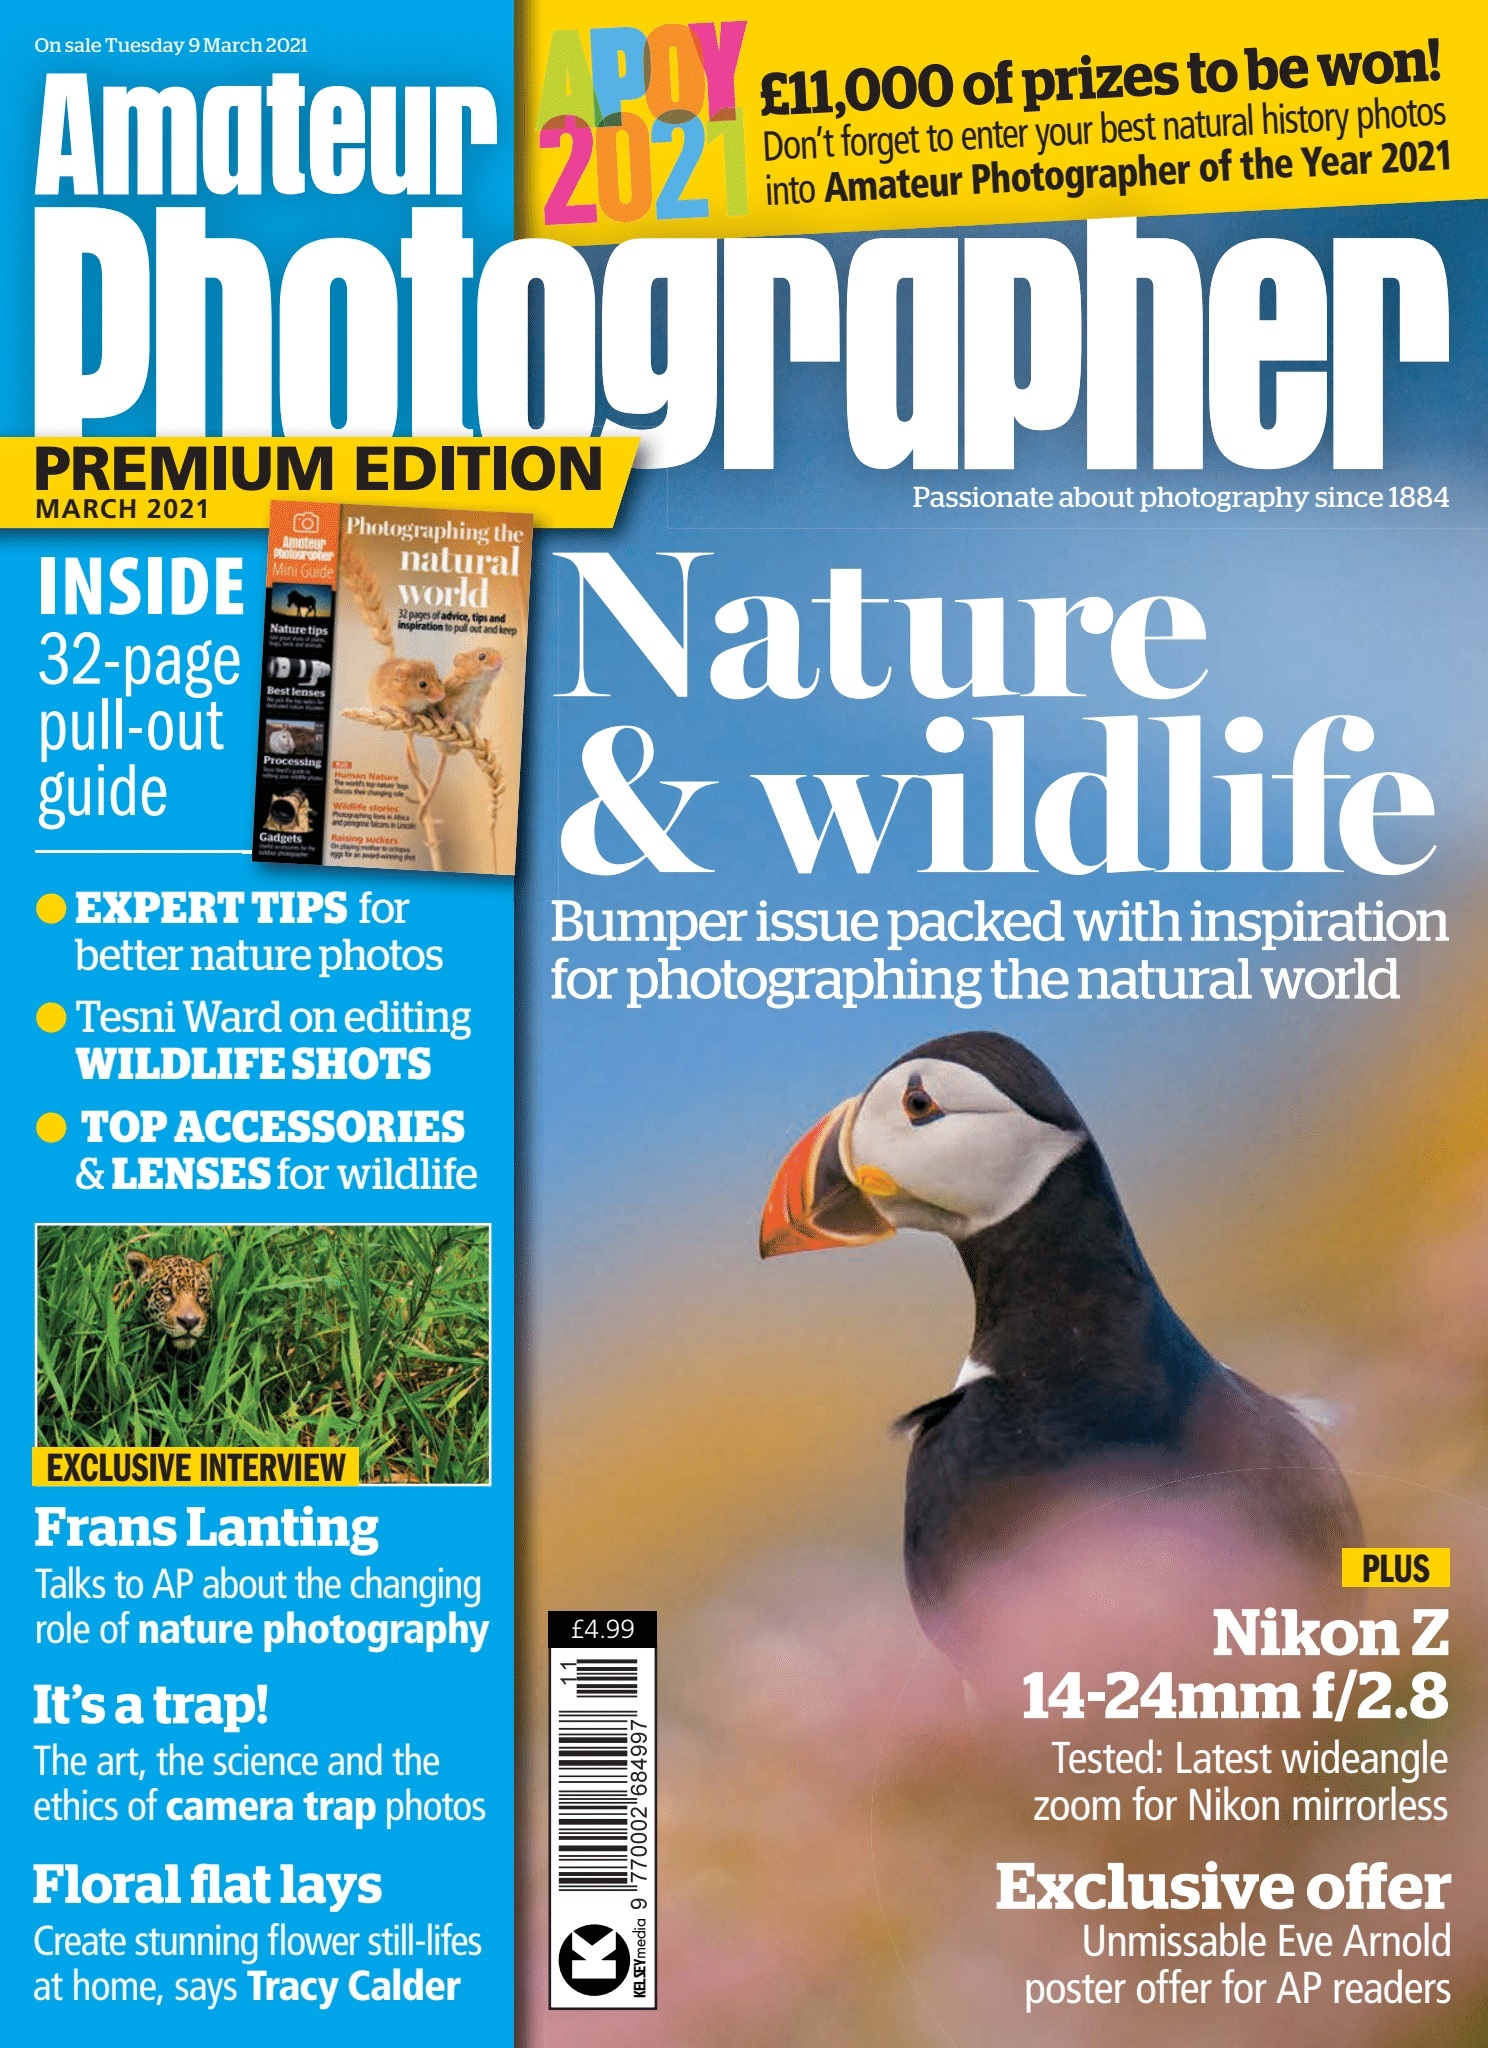 Amateur Photographer Premium Edition March 2021 - Nature & Wildlife